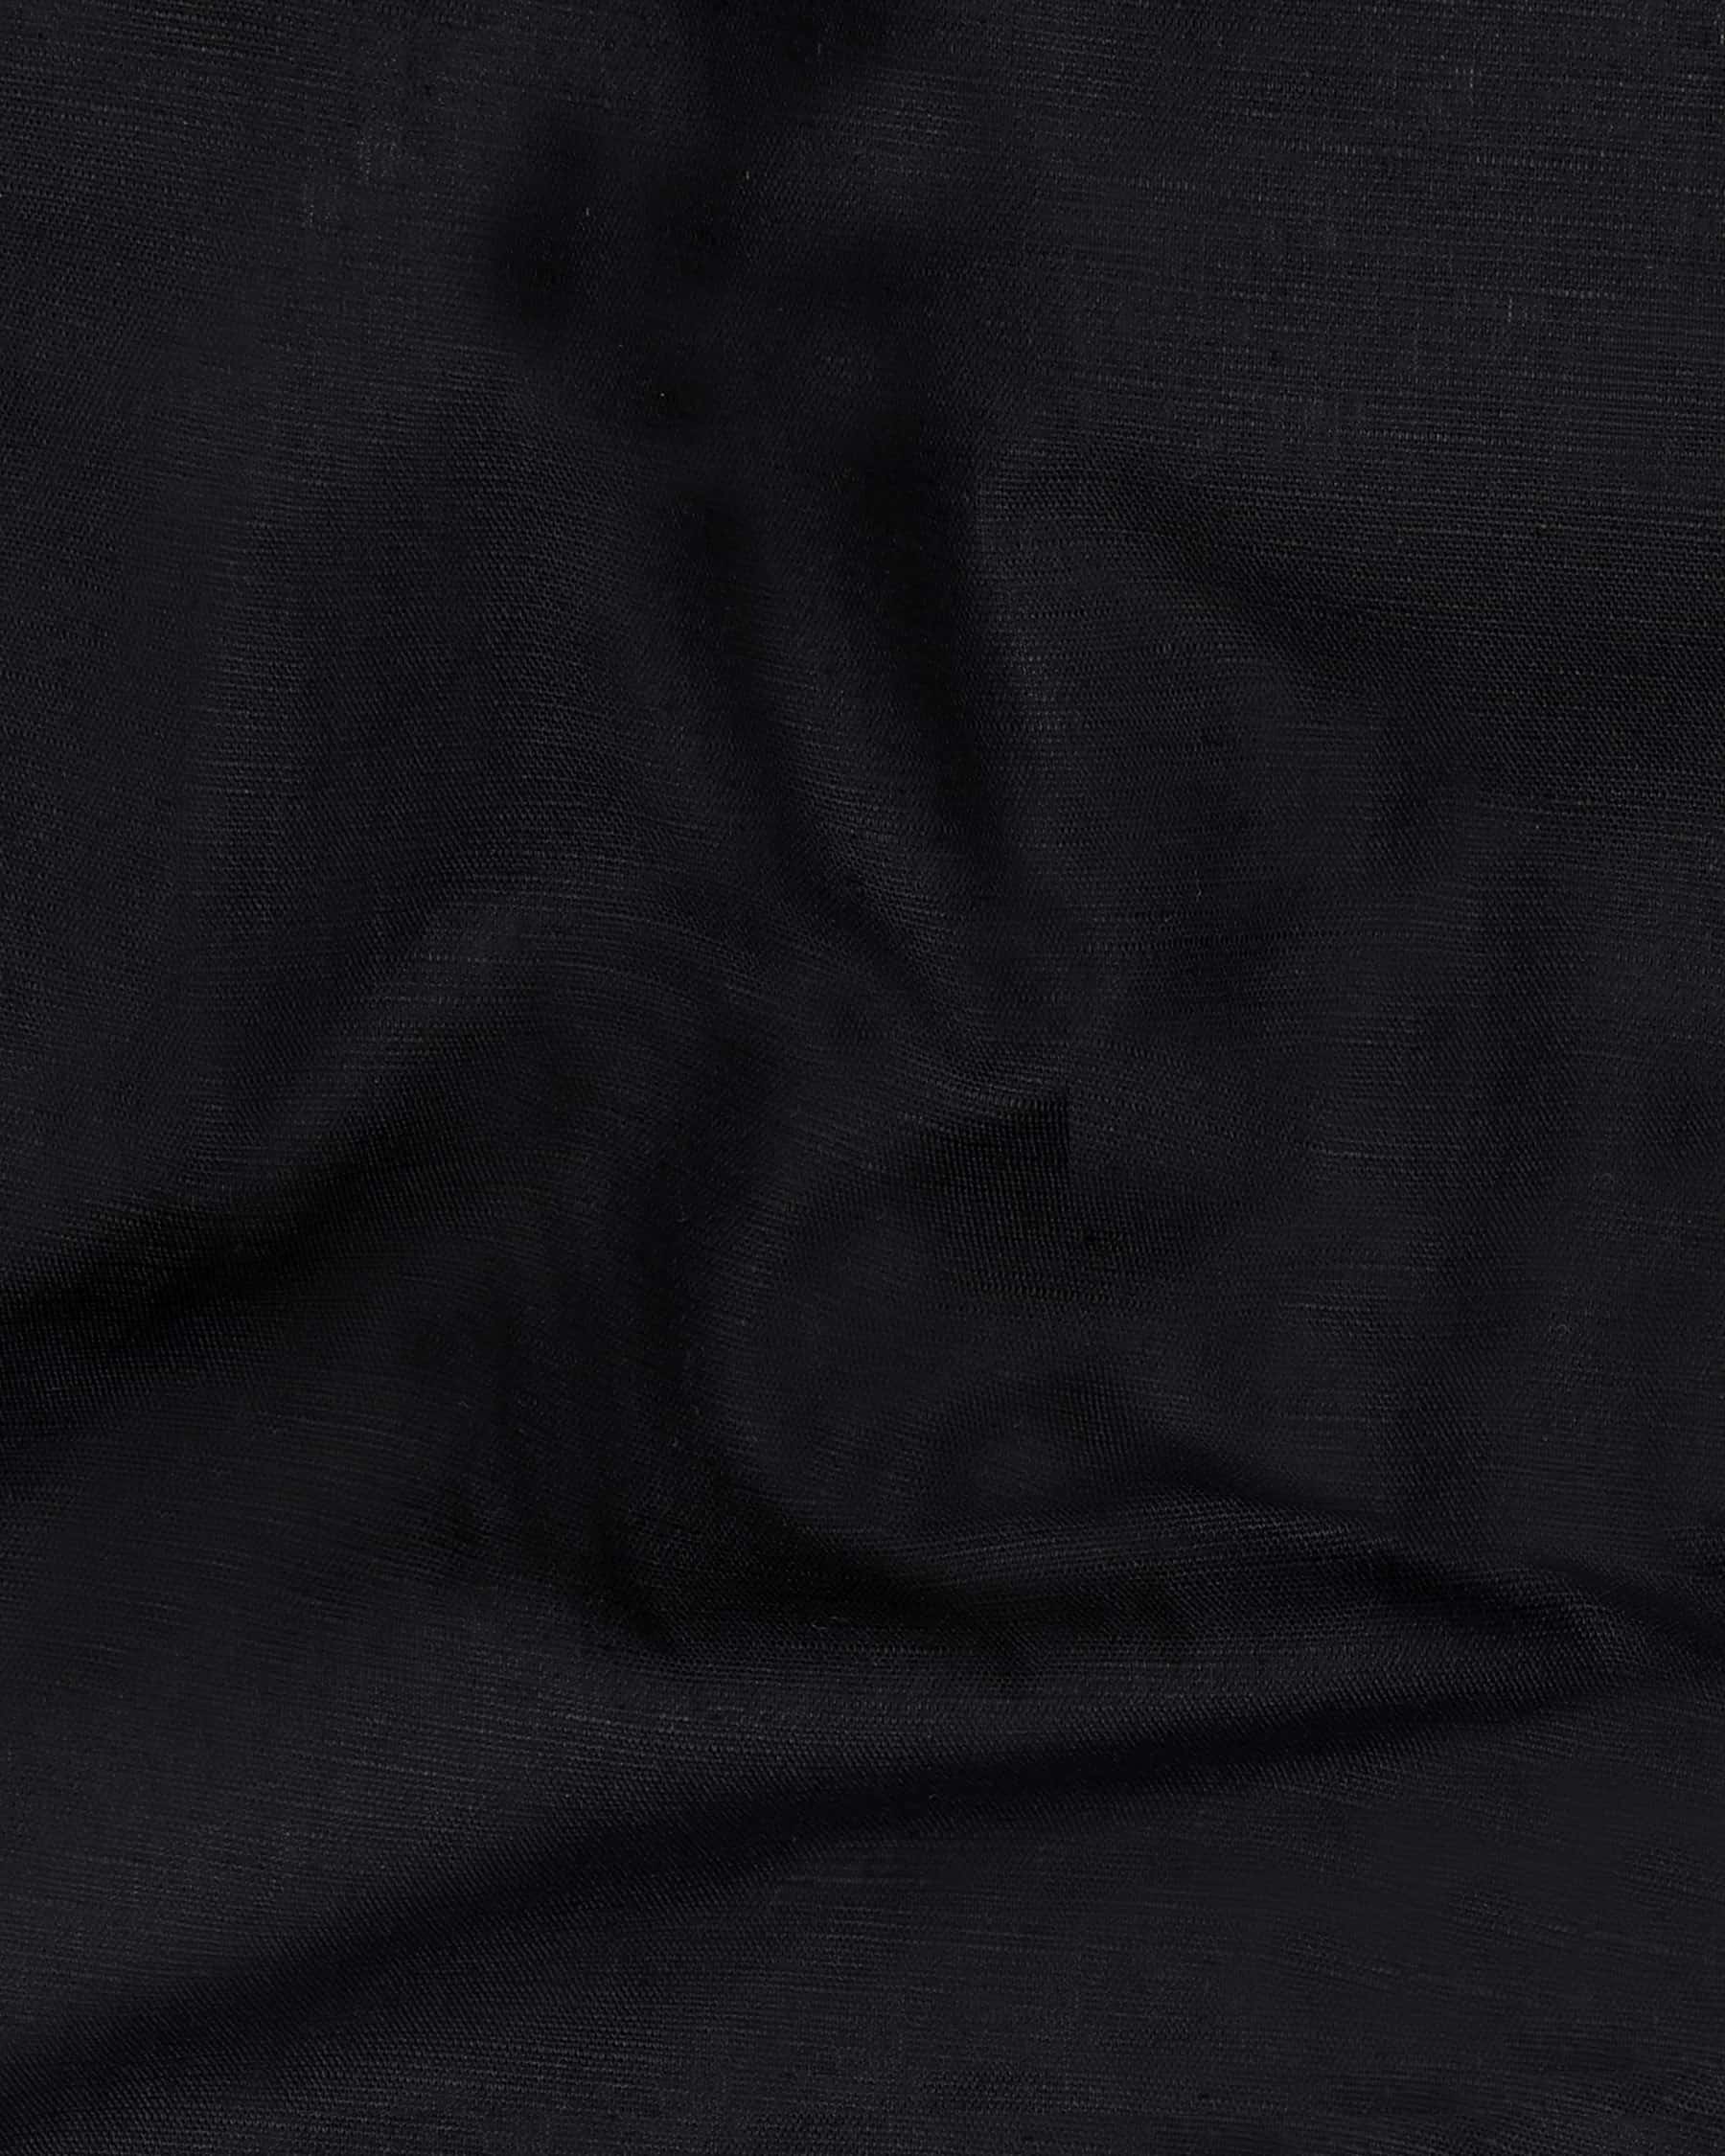 Jade Black Rice stitched Luxurious Linen Shirt 3121BLK-CT-38, 3121BLK-CT-H-38, 3121BLK-CT-39, 3121BLK-CT-H-39, 3121BLK-CT-40, 3121BLK-CT-H-40, 3121BLK-CT-42, 3121BLK-CT-H-42, 3121BLK-CT-44, 3121BLK-CT-H-44, 3121BLK-CT-46, 3121BLK-CT-H-46, 3121BLK-CT-48, 3121BLK-CT-H-48, 3121BLK-CT-50, 3121BLK-CT-H-50, 3121BLK-CT-52, 3121BLK-CT-H-52